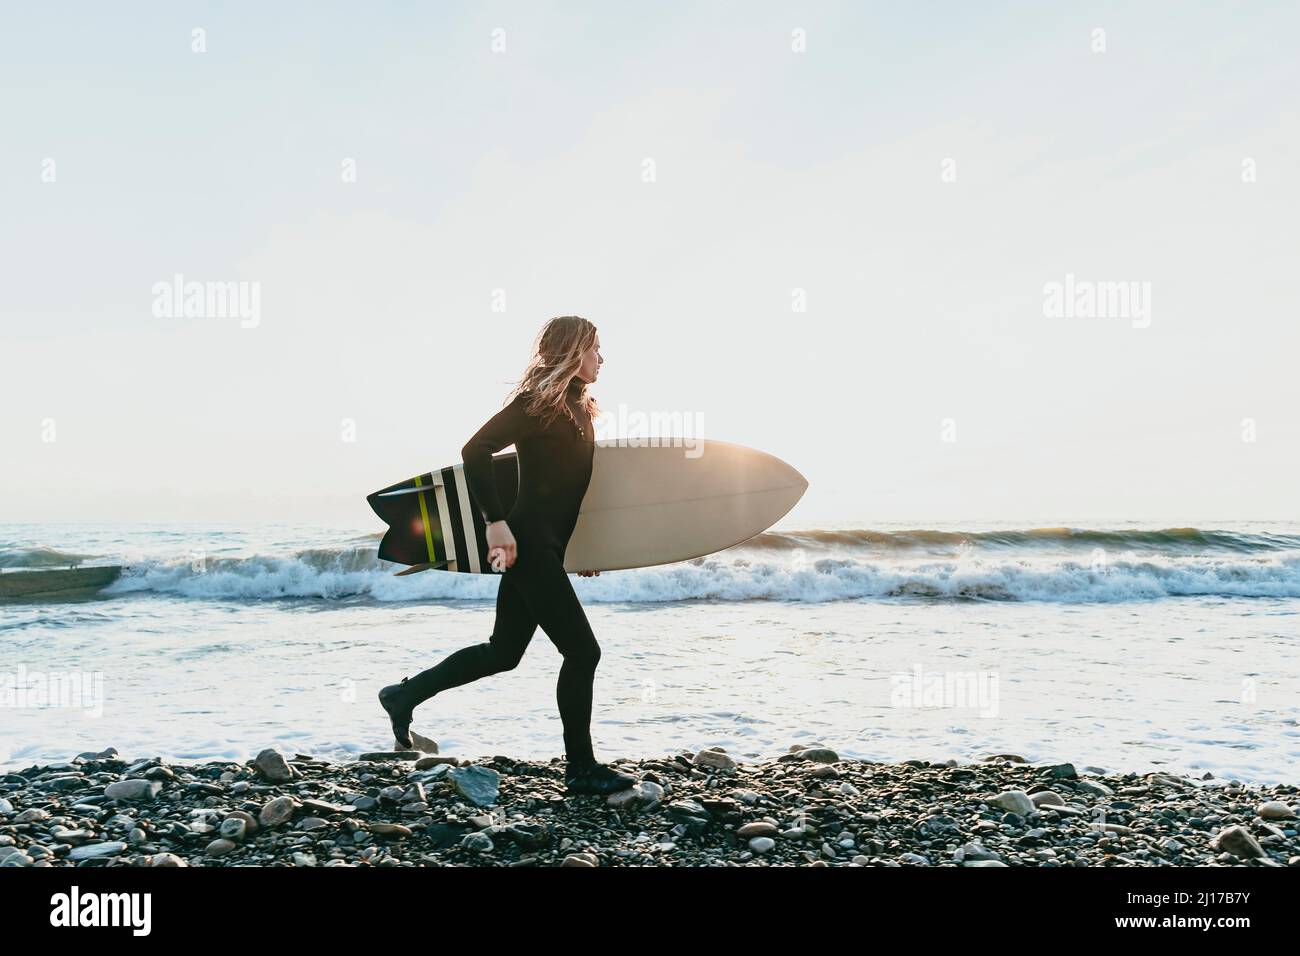 Man with surfboard running on beach Stock Photo